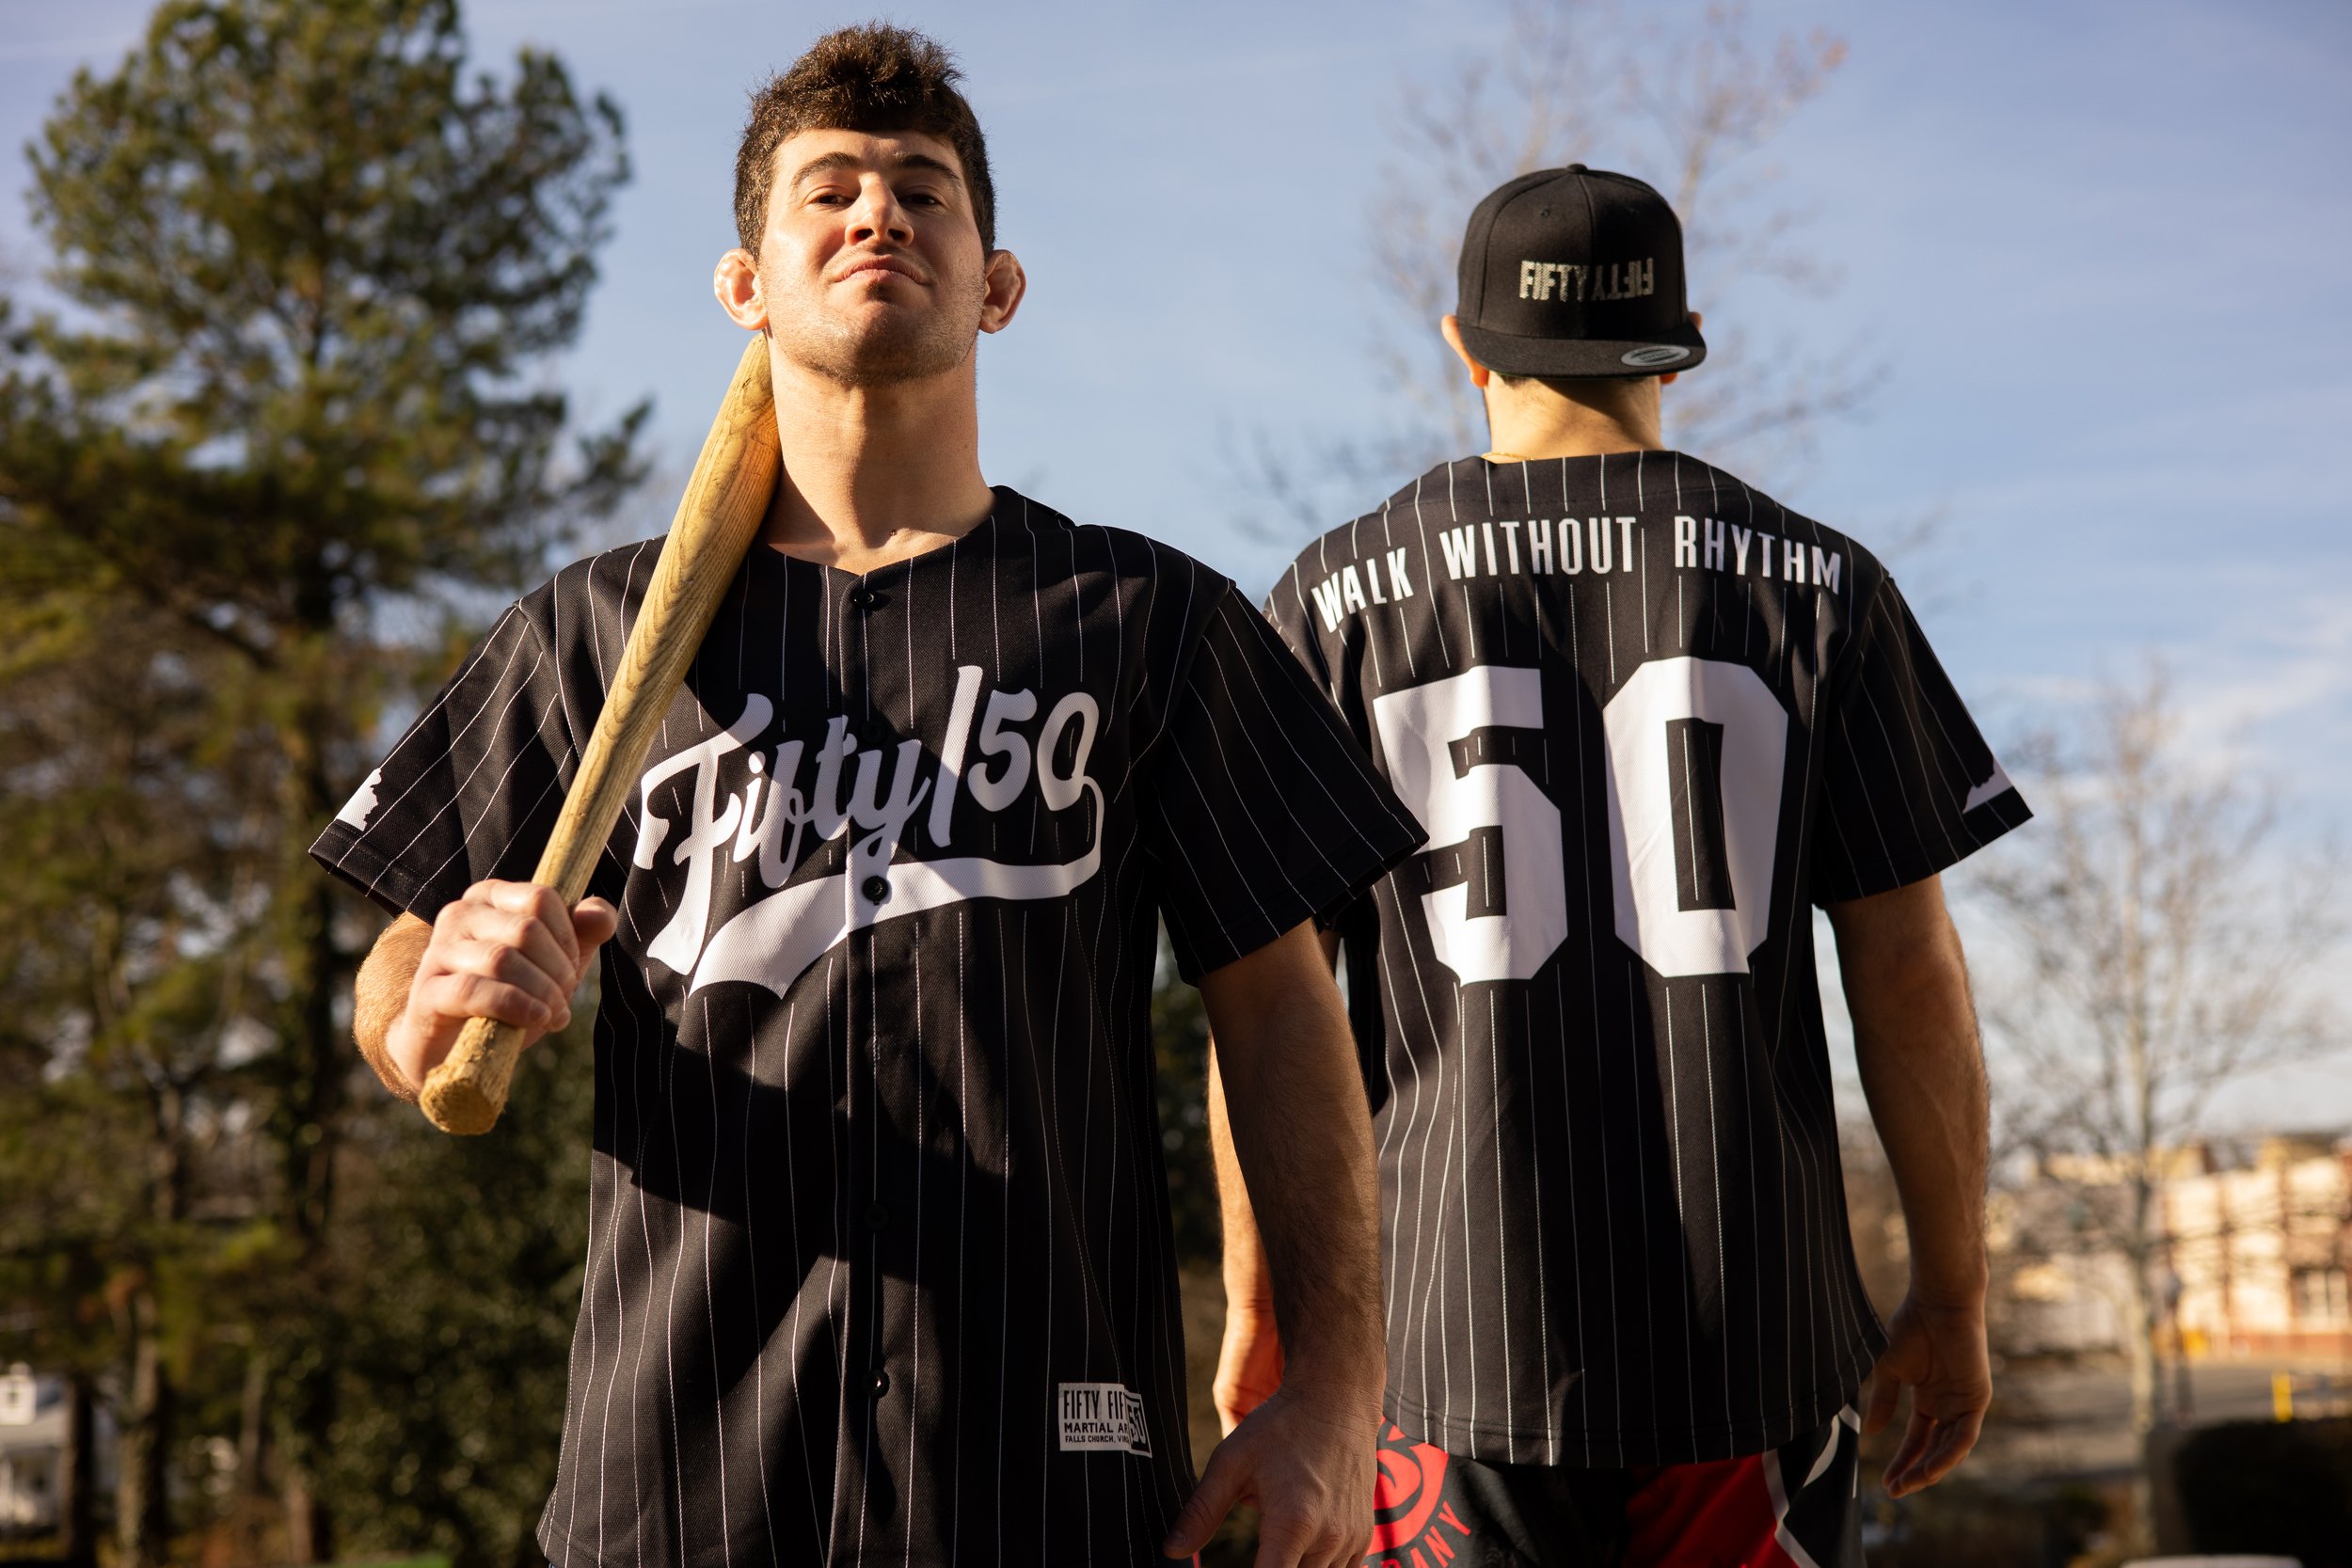 youth pinstripe baseball uniforms